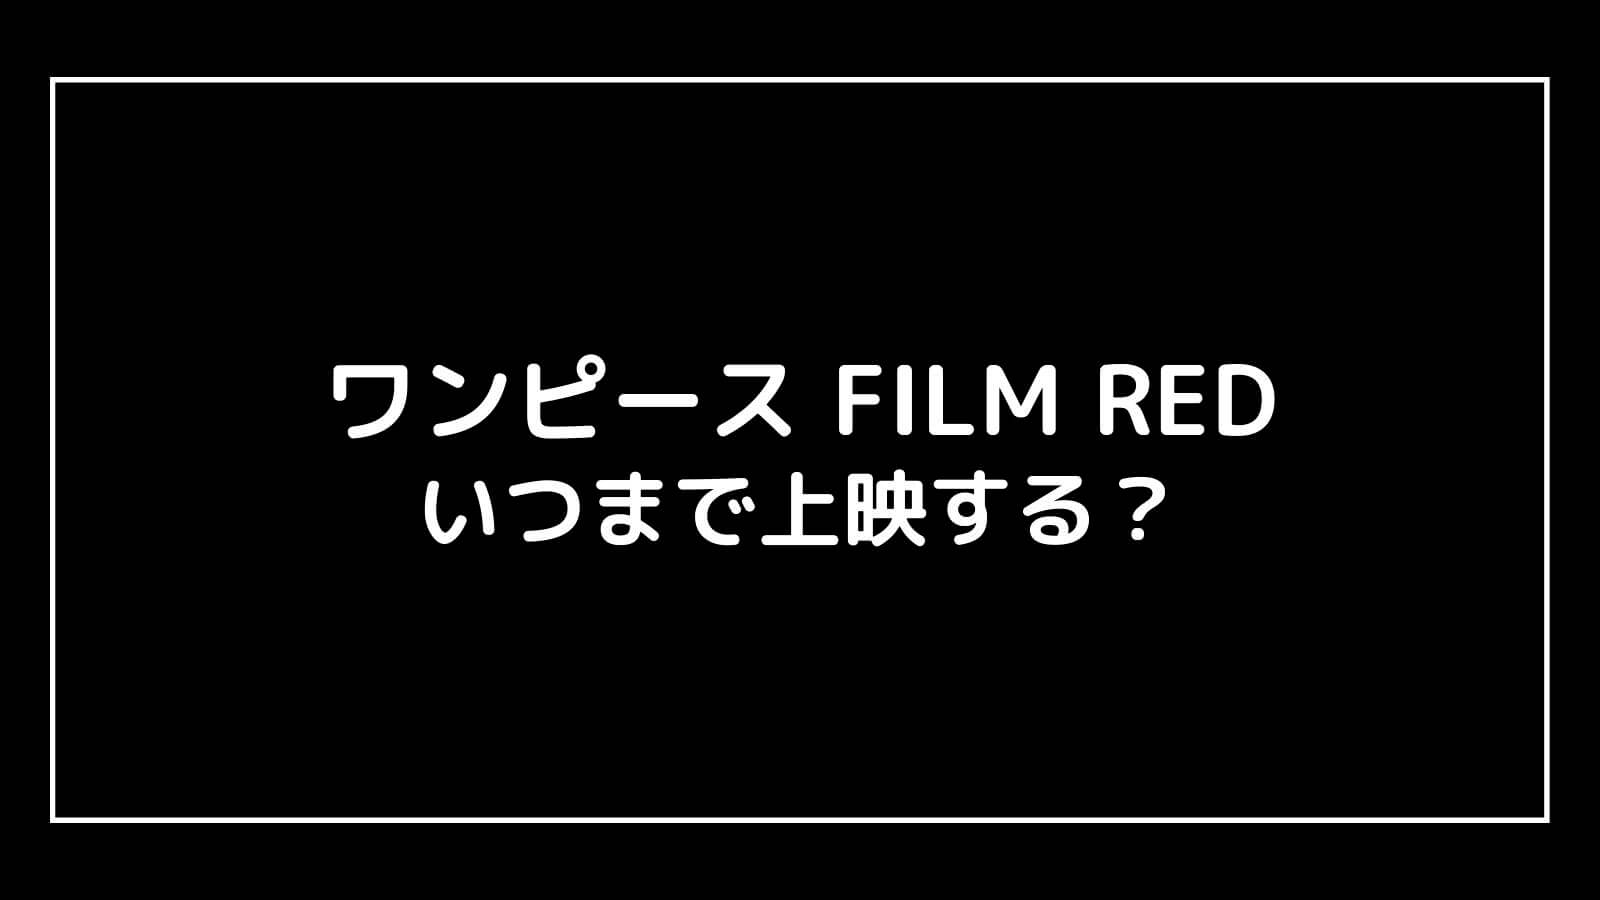 ONE PIECE FILM RED｜2022年映画はいつまで上映するのか元映画館社員が公開期間を予想！